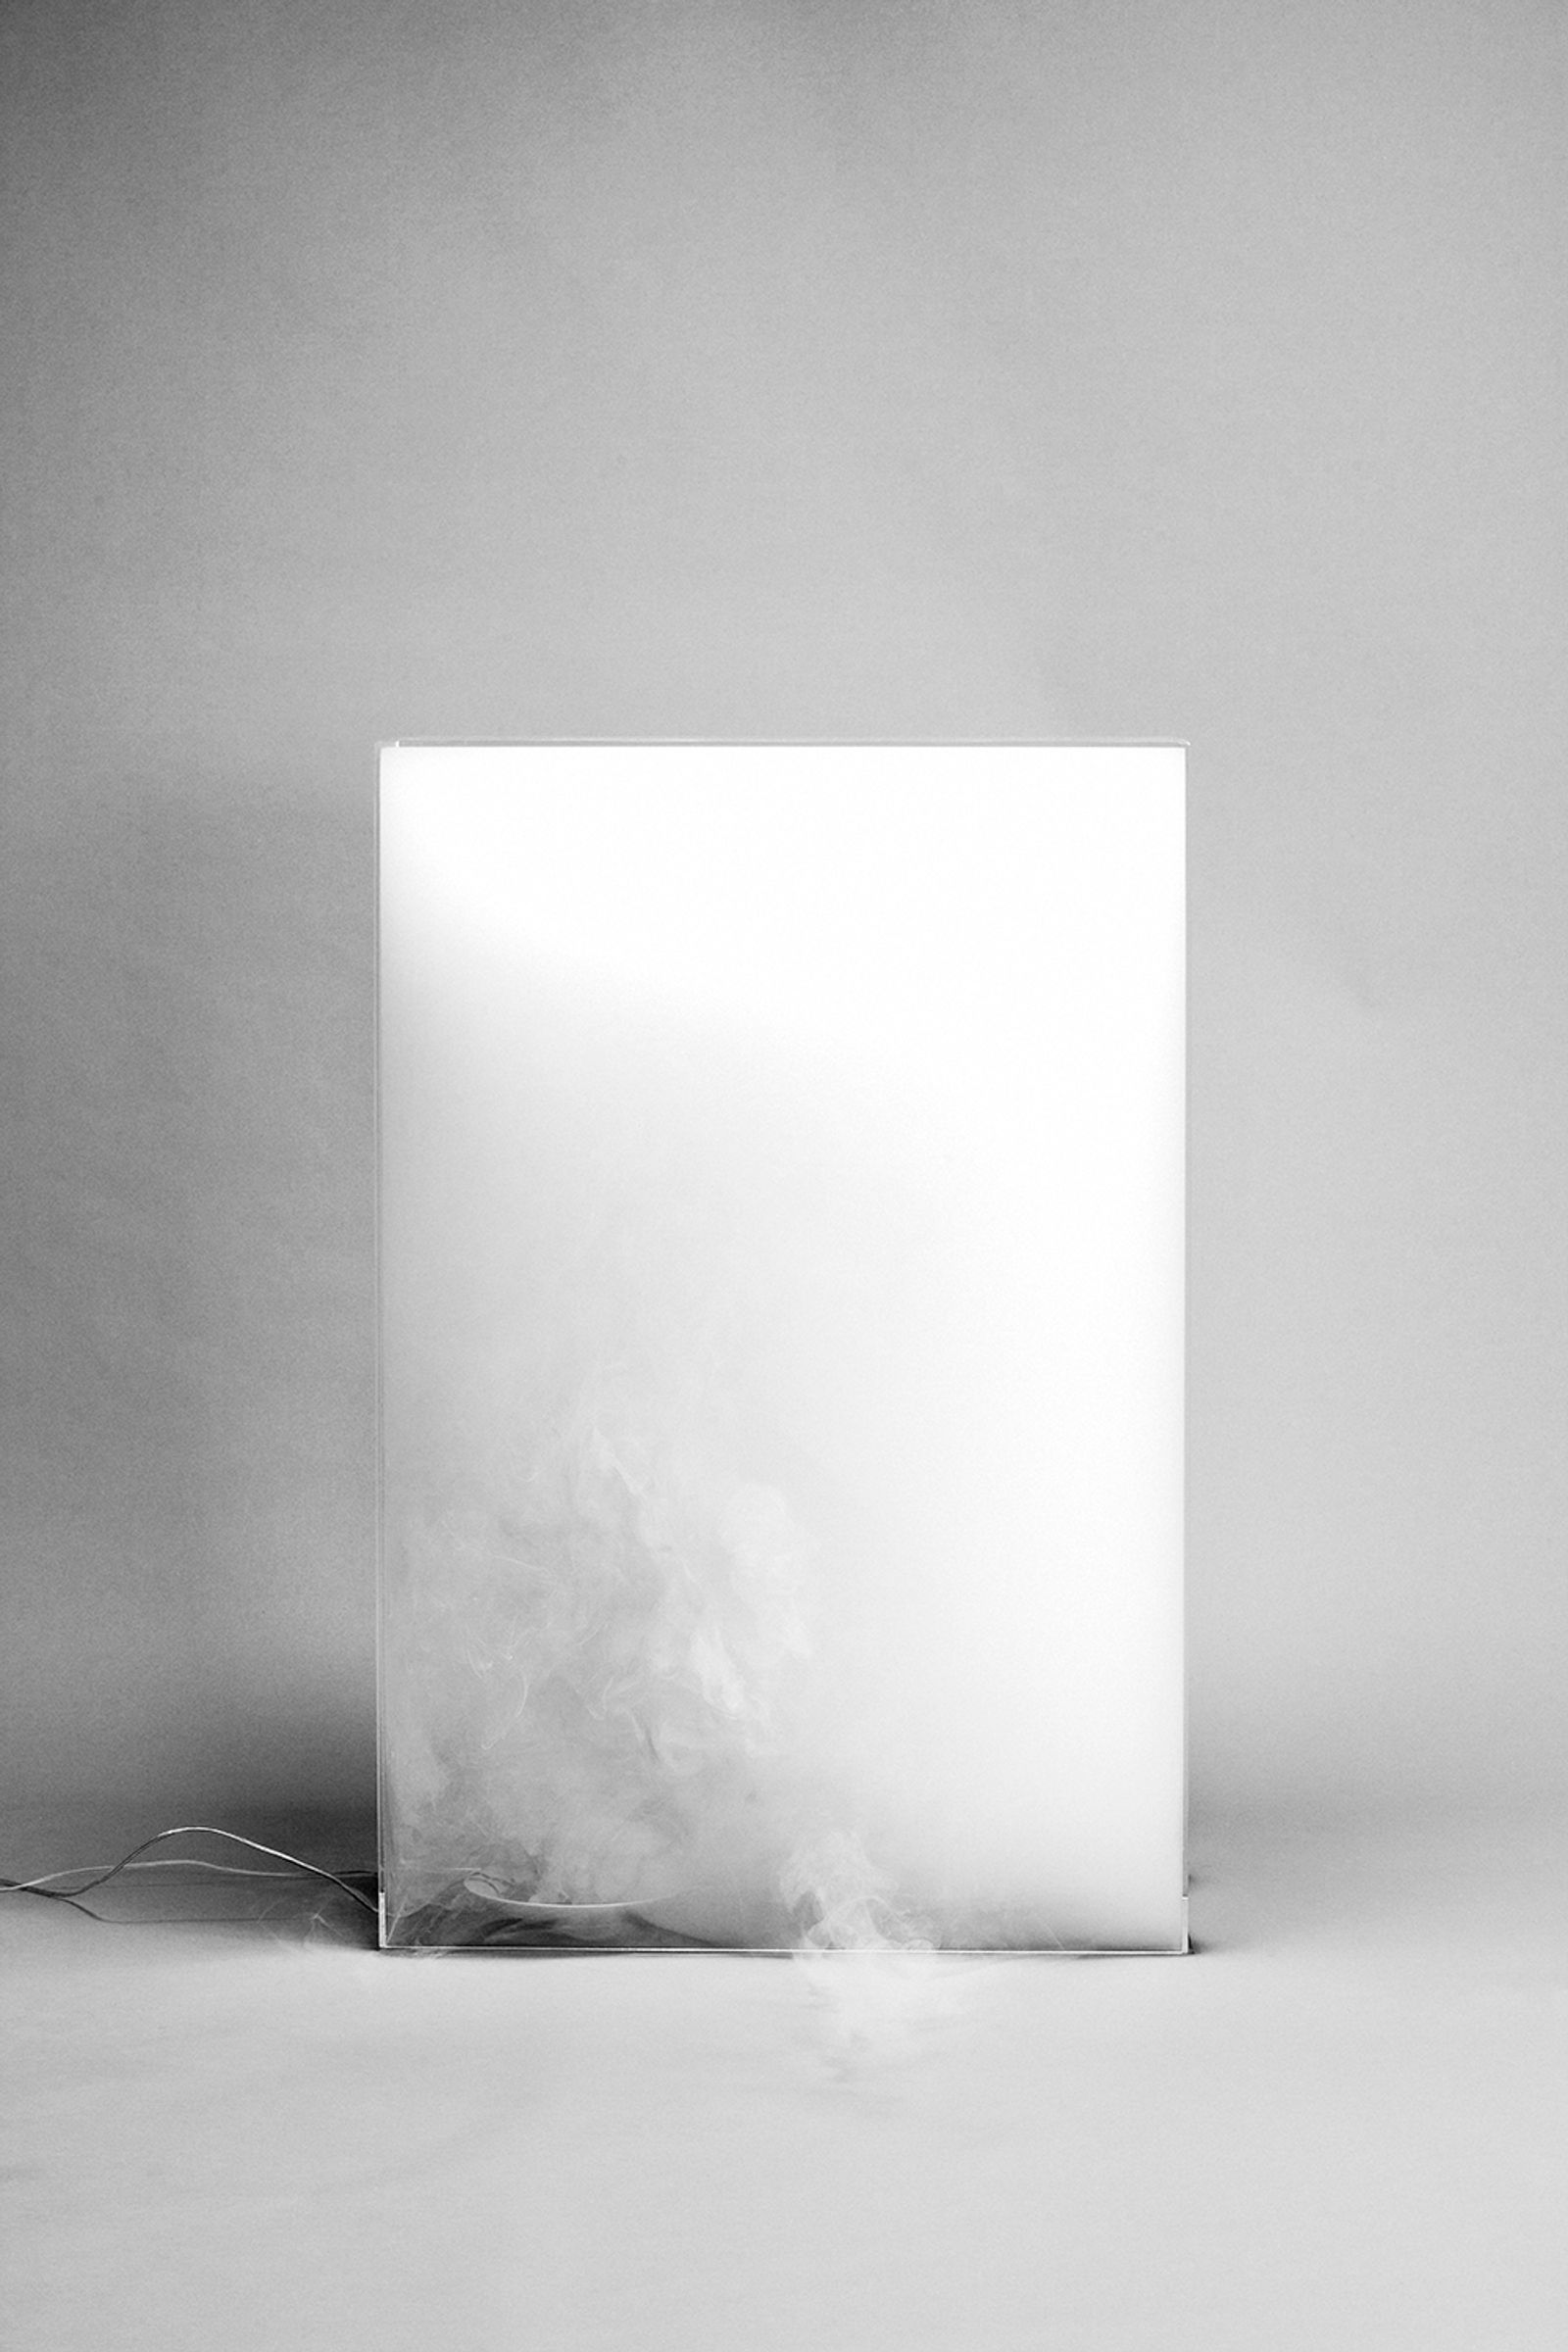 © Christine Atkinson - “White Smoke” Inkjet Print 30” x 40” 2019